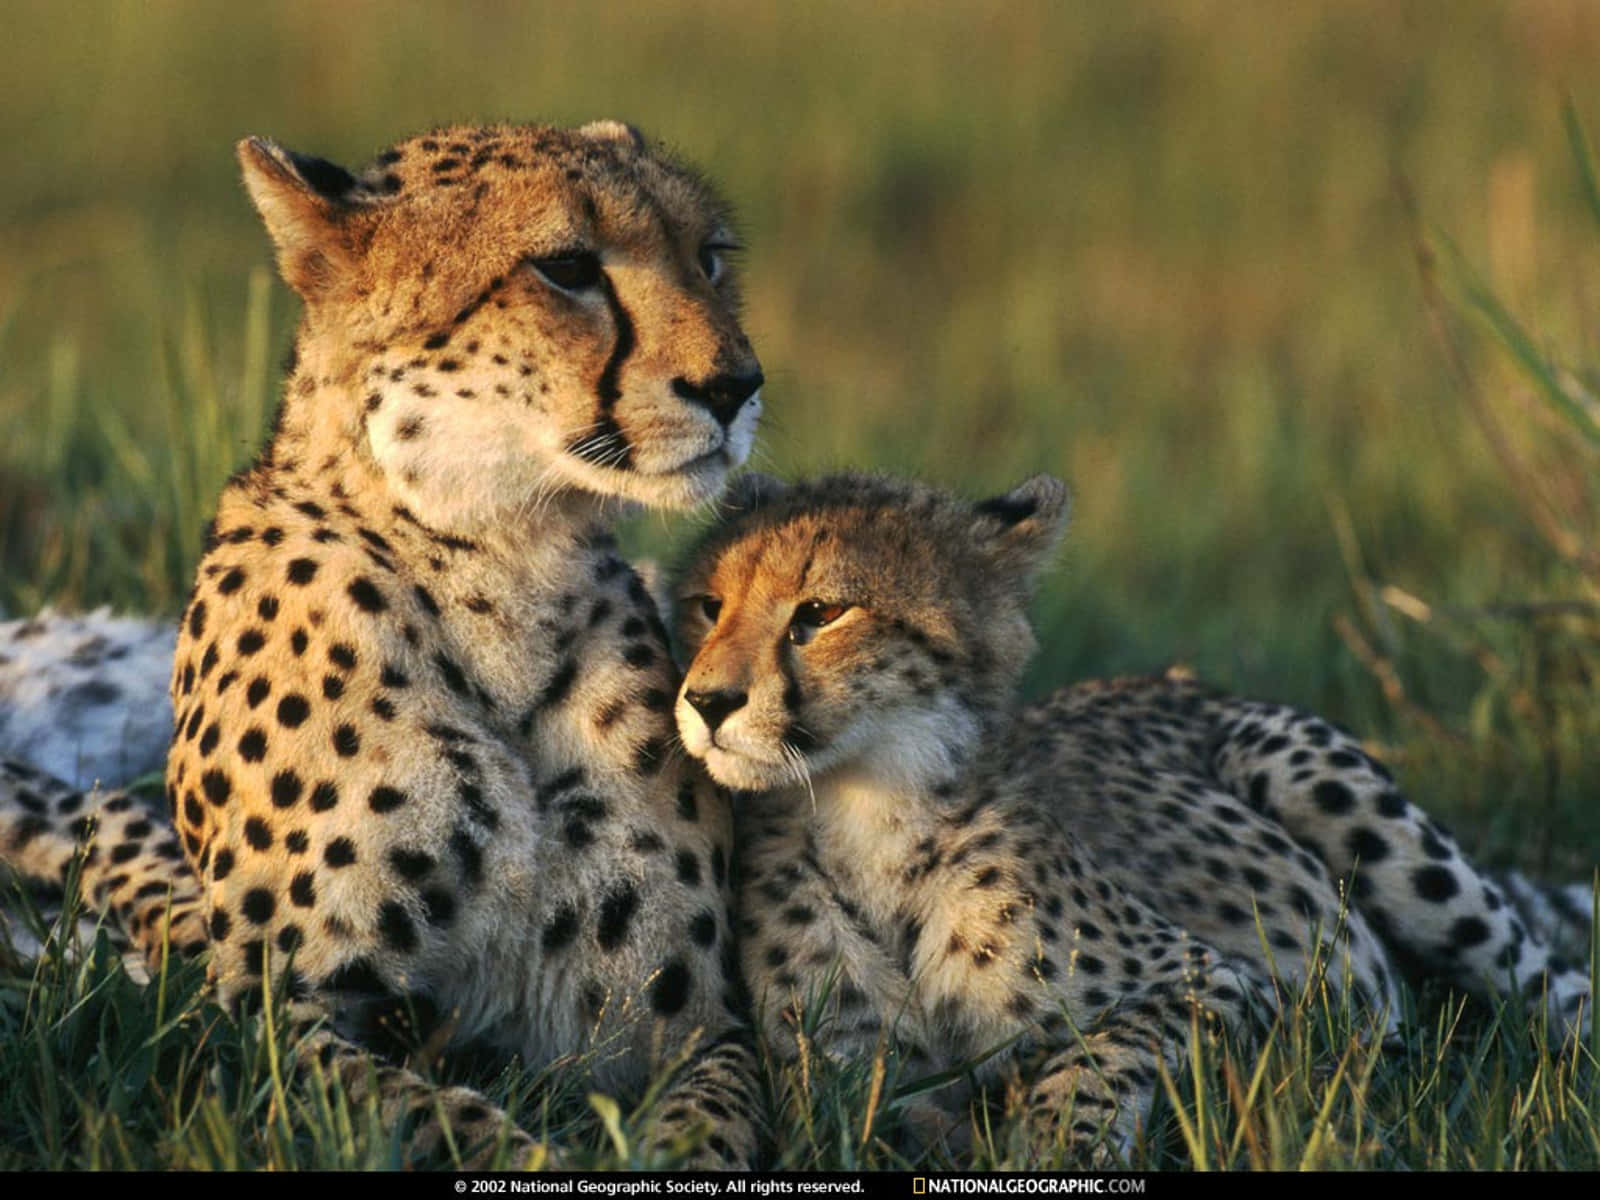 Bedårandelekfullt - En Bebis Gepard Wallpaper